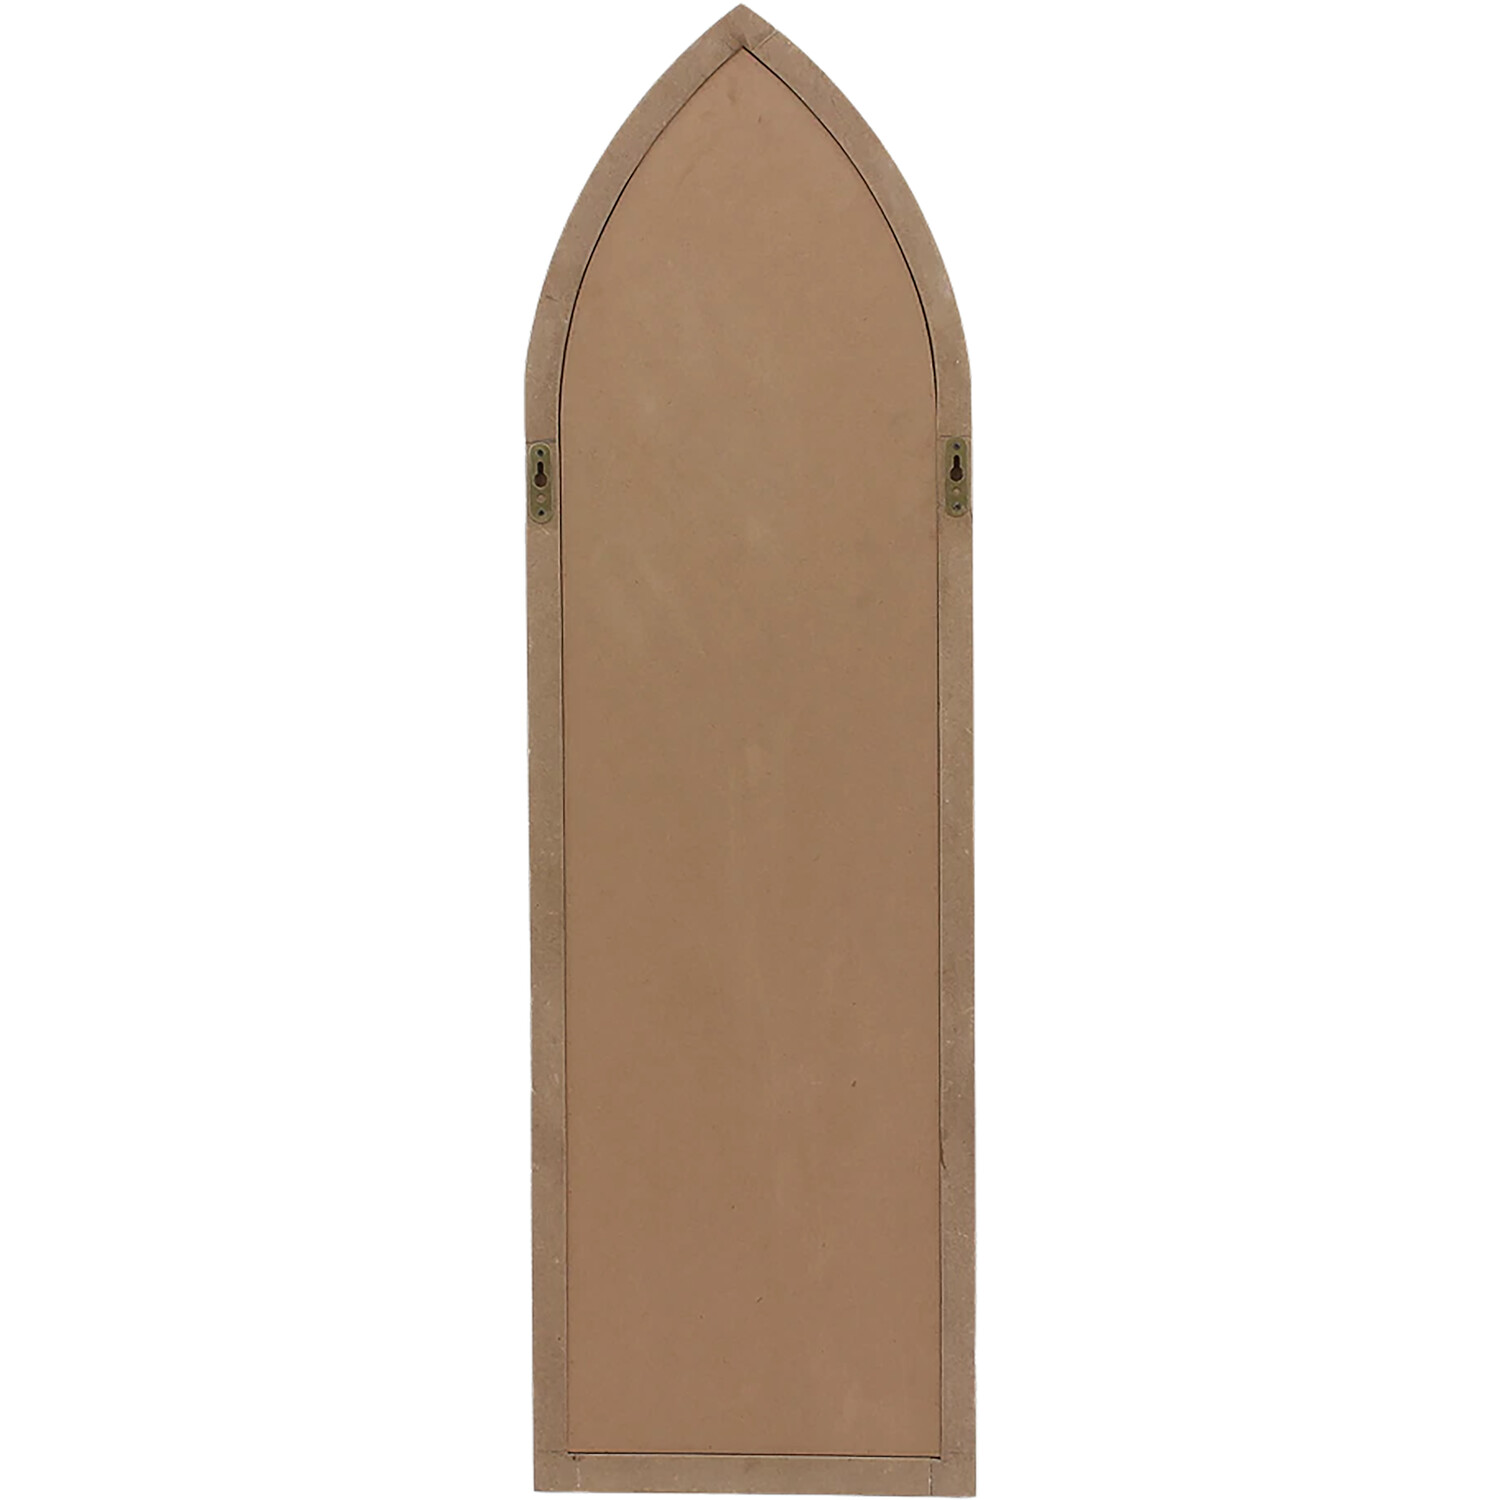 Narrow Arch Wooden Mirror - Brown Image 2